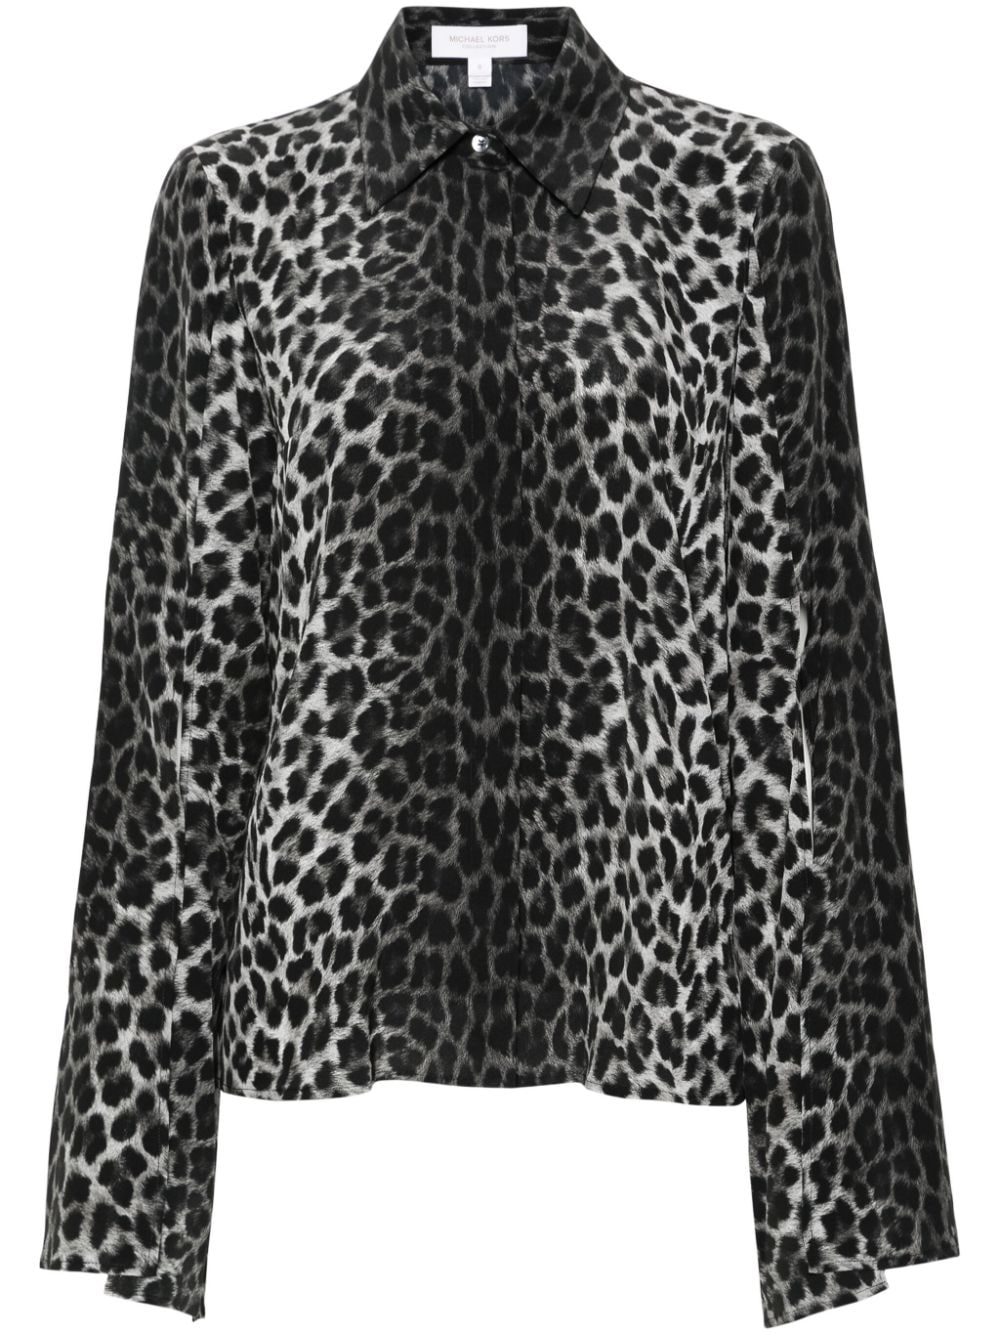 Michael Kors Collection leopard-print silk shirt - Grey von Michael Kors Collection